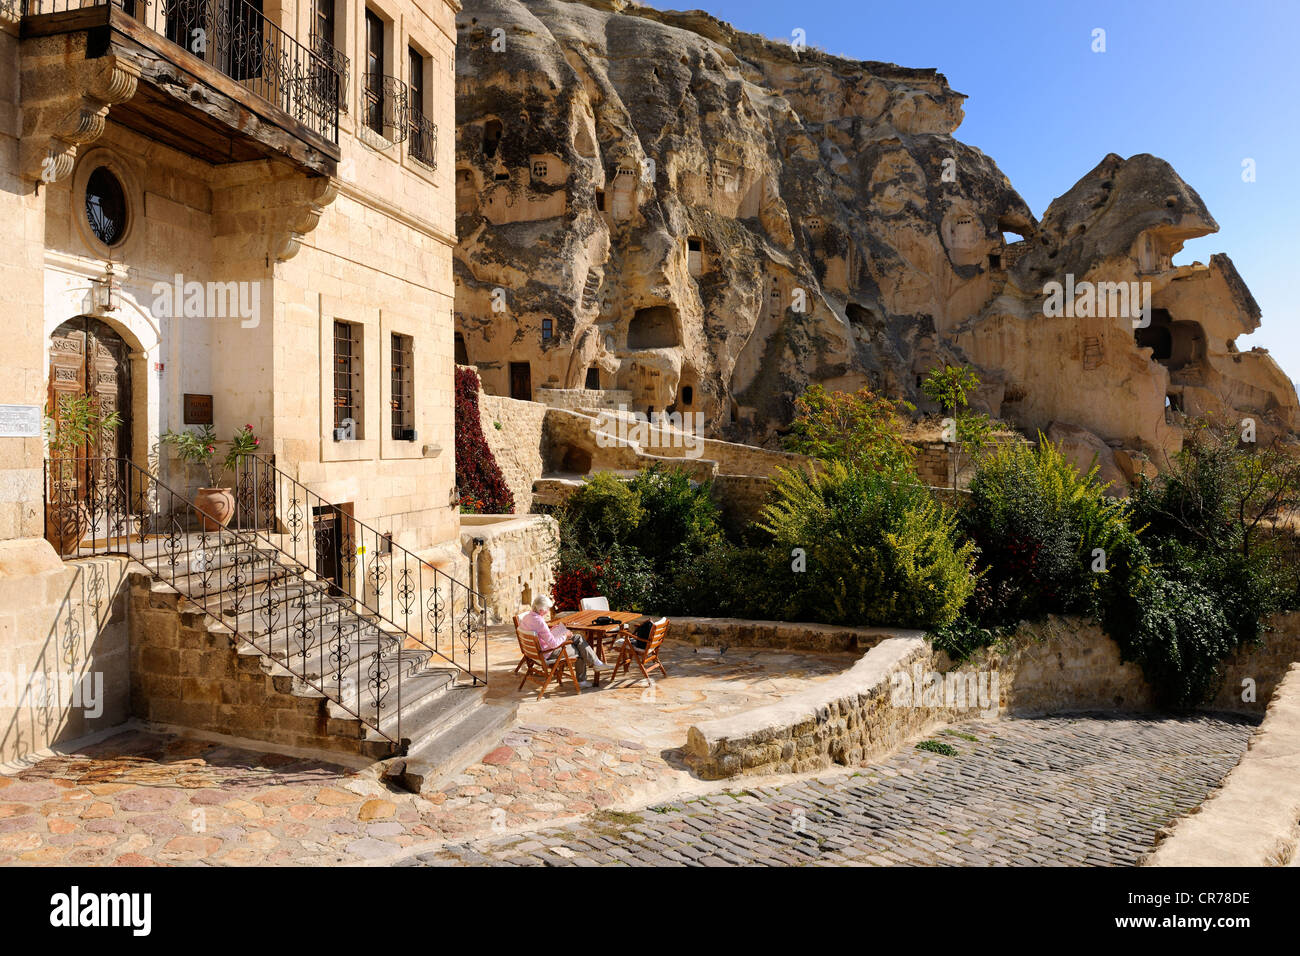 Turkey, Central Anatolia, Nevsehir Province, Cappadocia UNESCO World Heritage, Urgup, Yunak Evleri luxury hotel in old Stock Photo